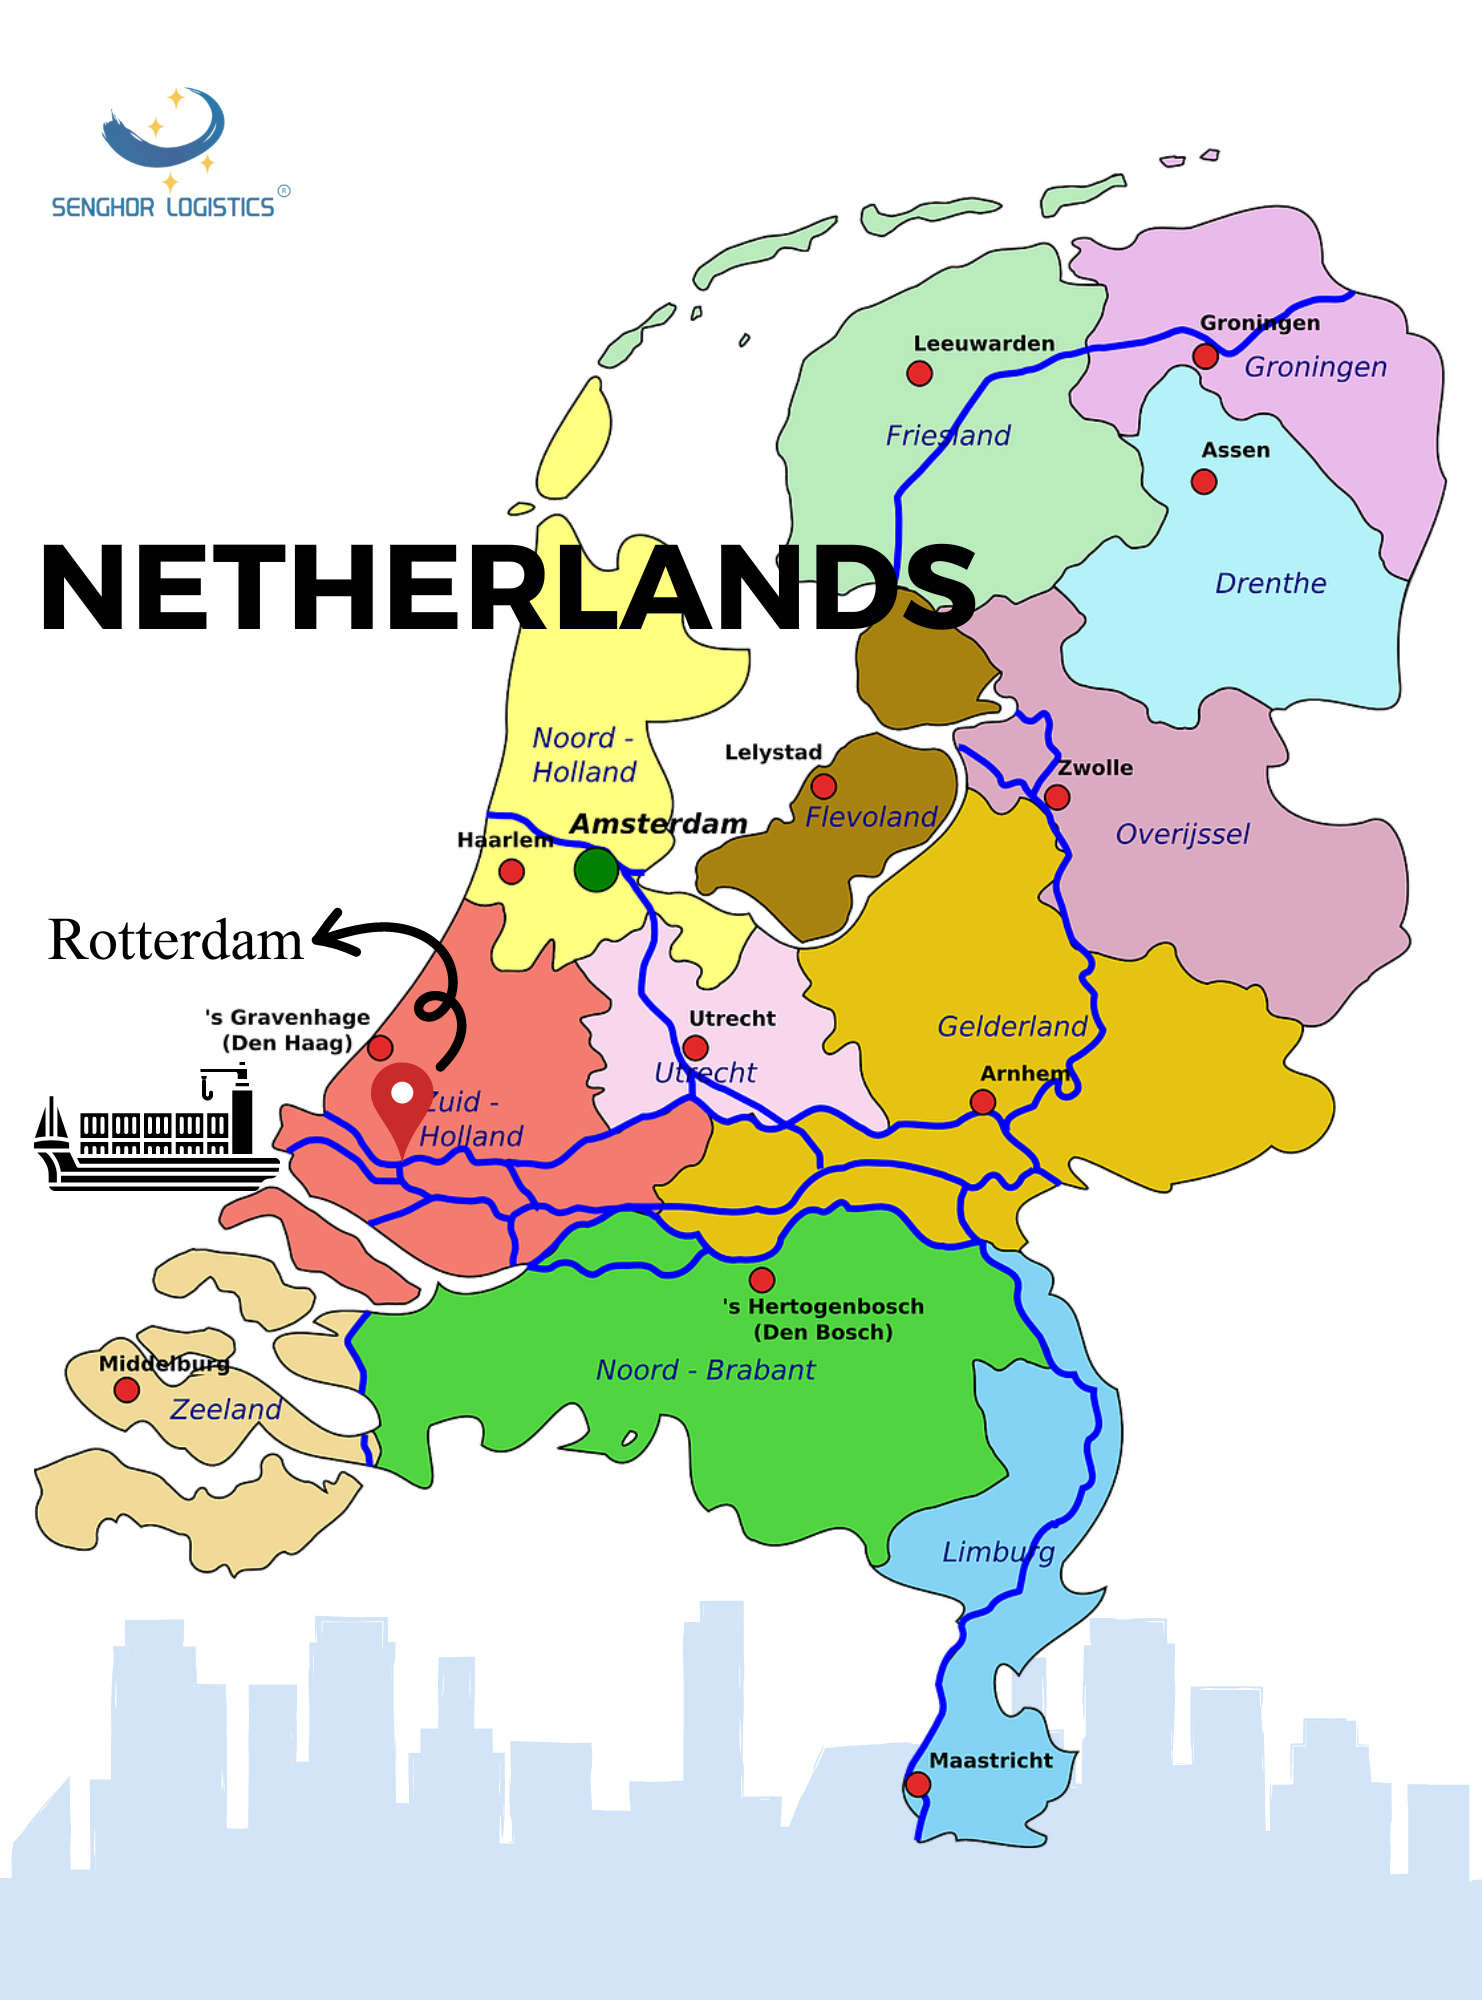 3senghor eekaderi china si Netherlands